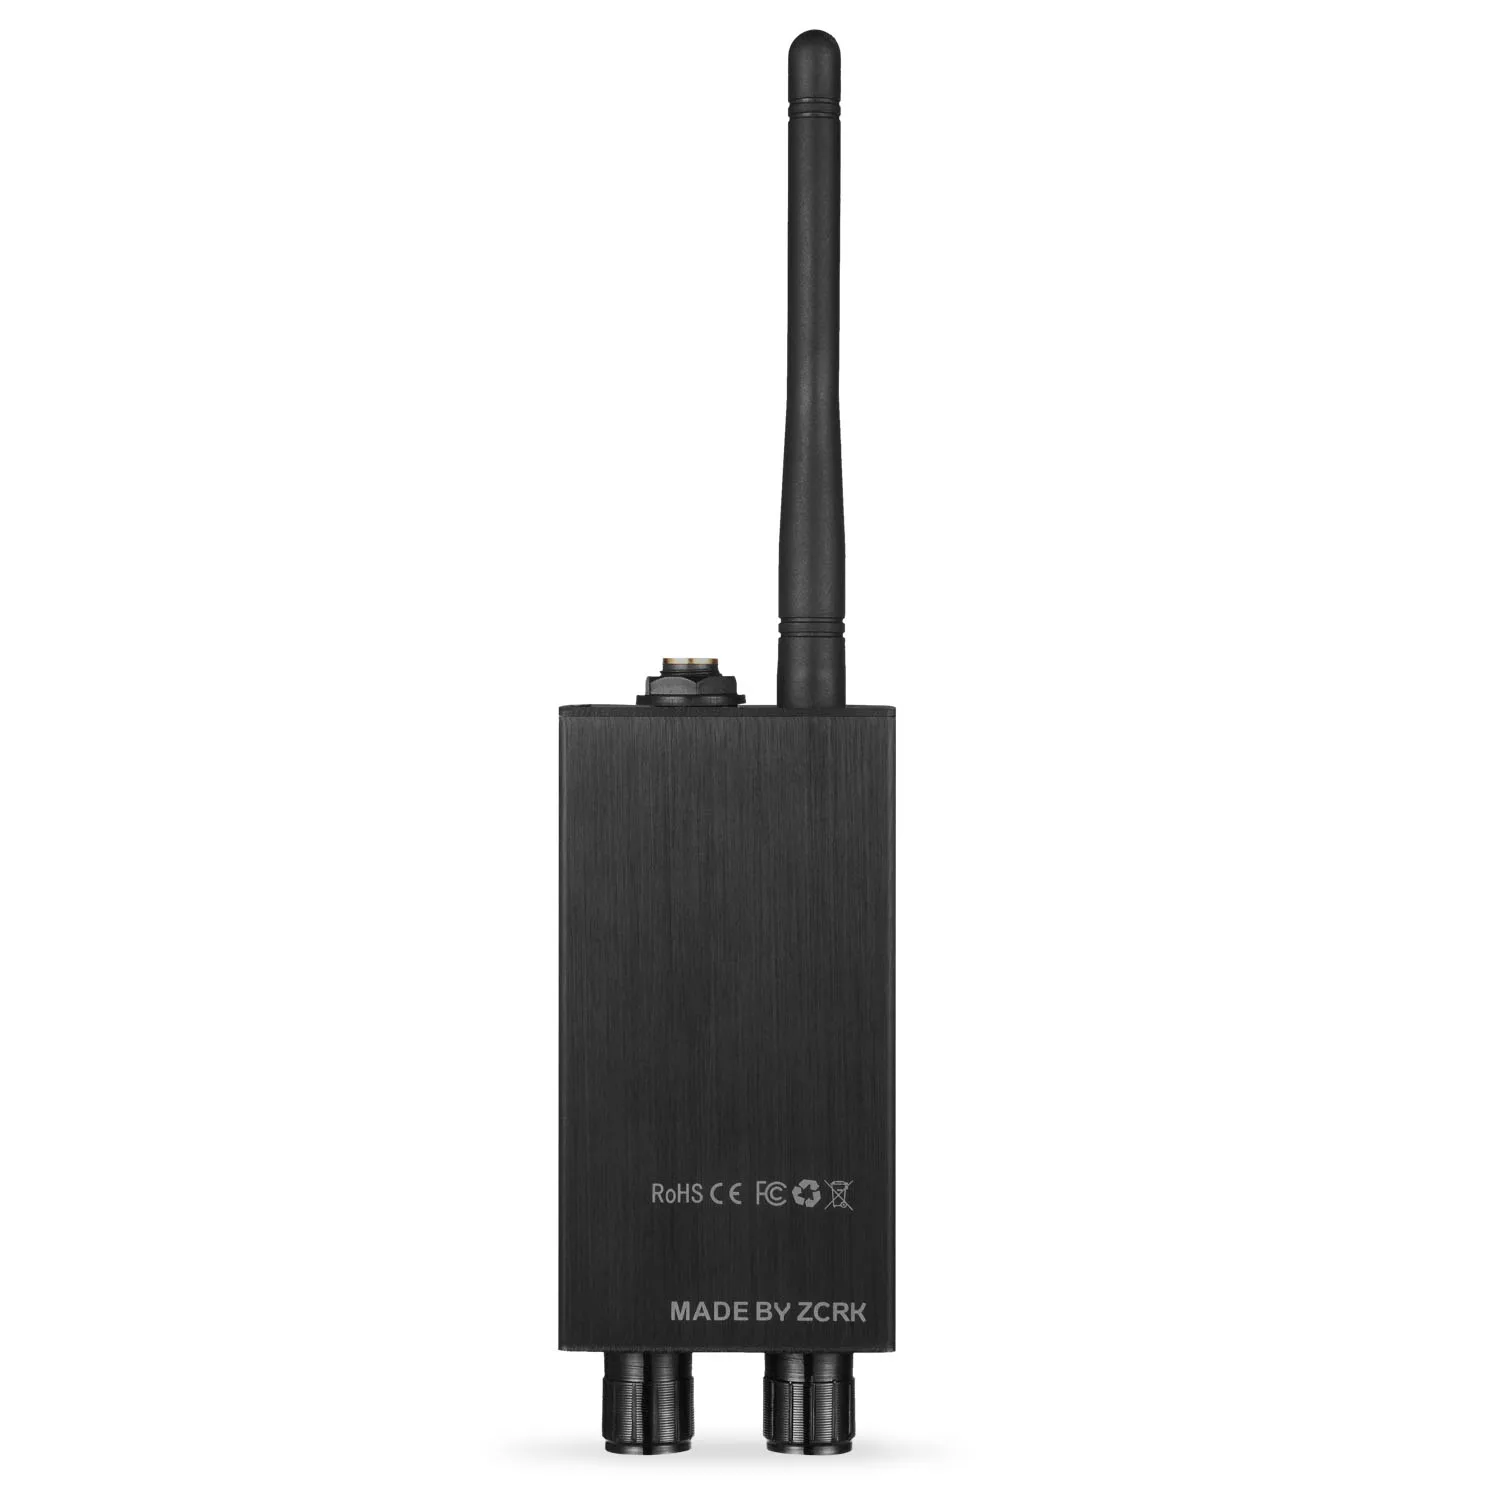 Popular Security Device IR Laser Spy Camera Scanner X+RF Signal Detector Bug Spy GPS Tracker Finder with Dual Antennas M8000